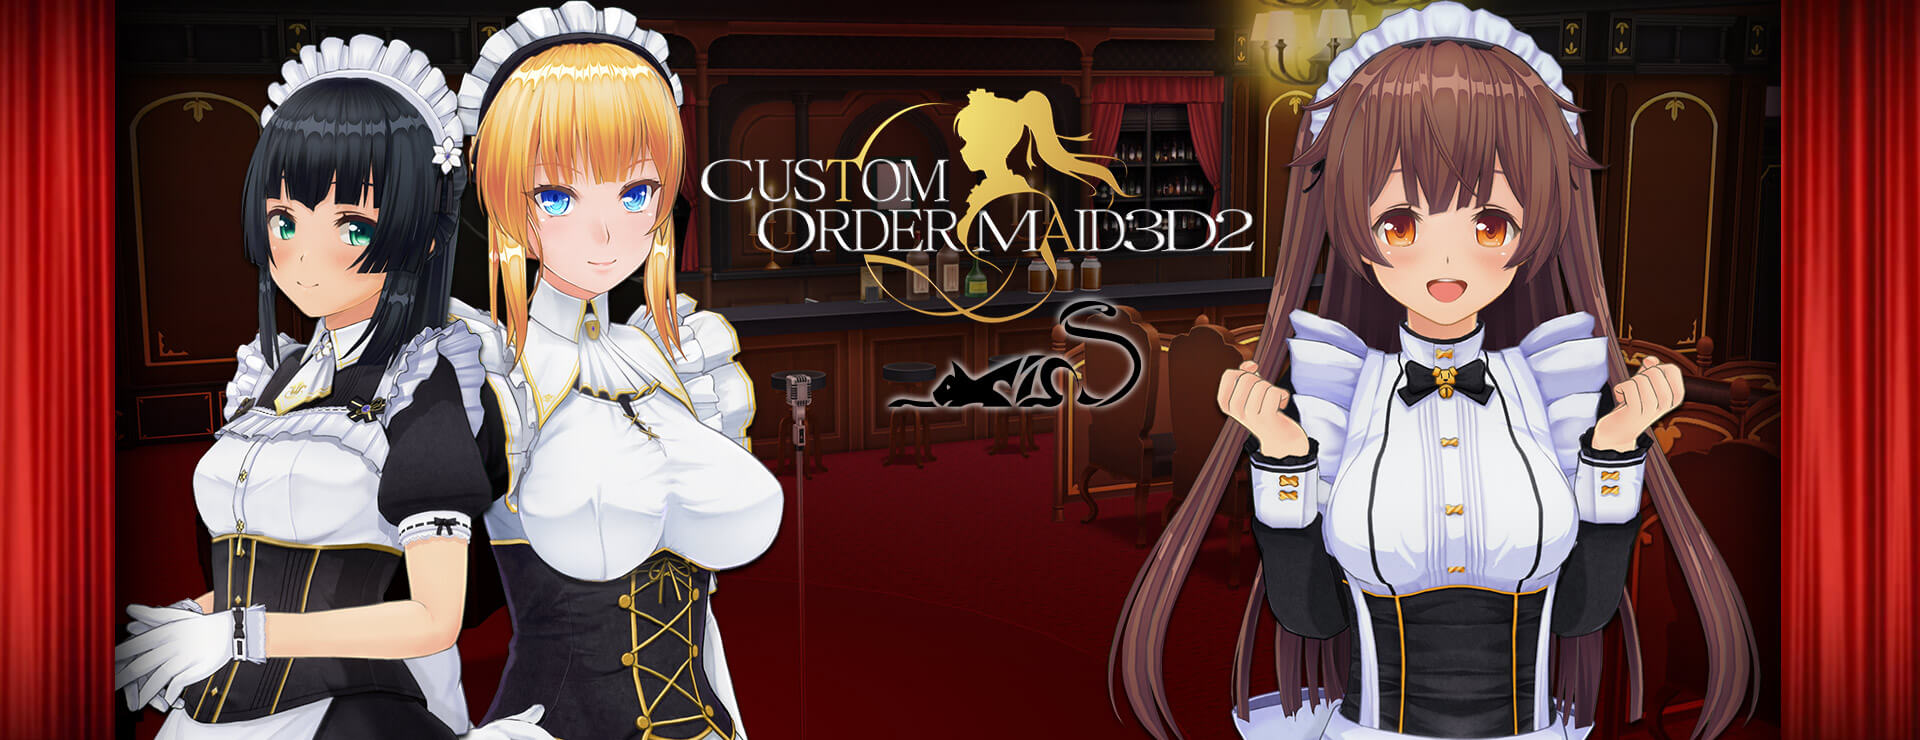 Custom Order Maid 3D2 Game - Simulation Jeu